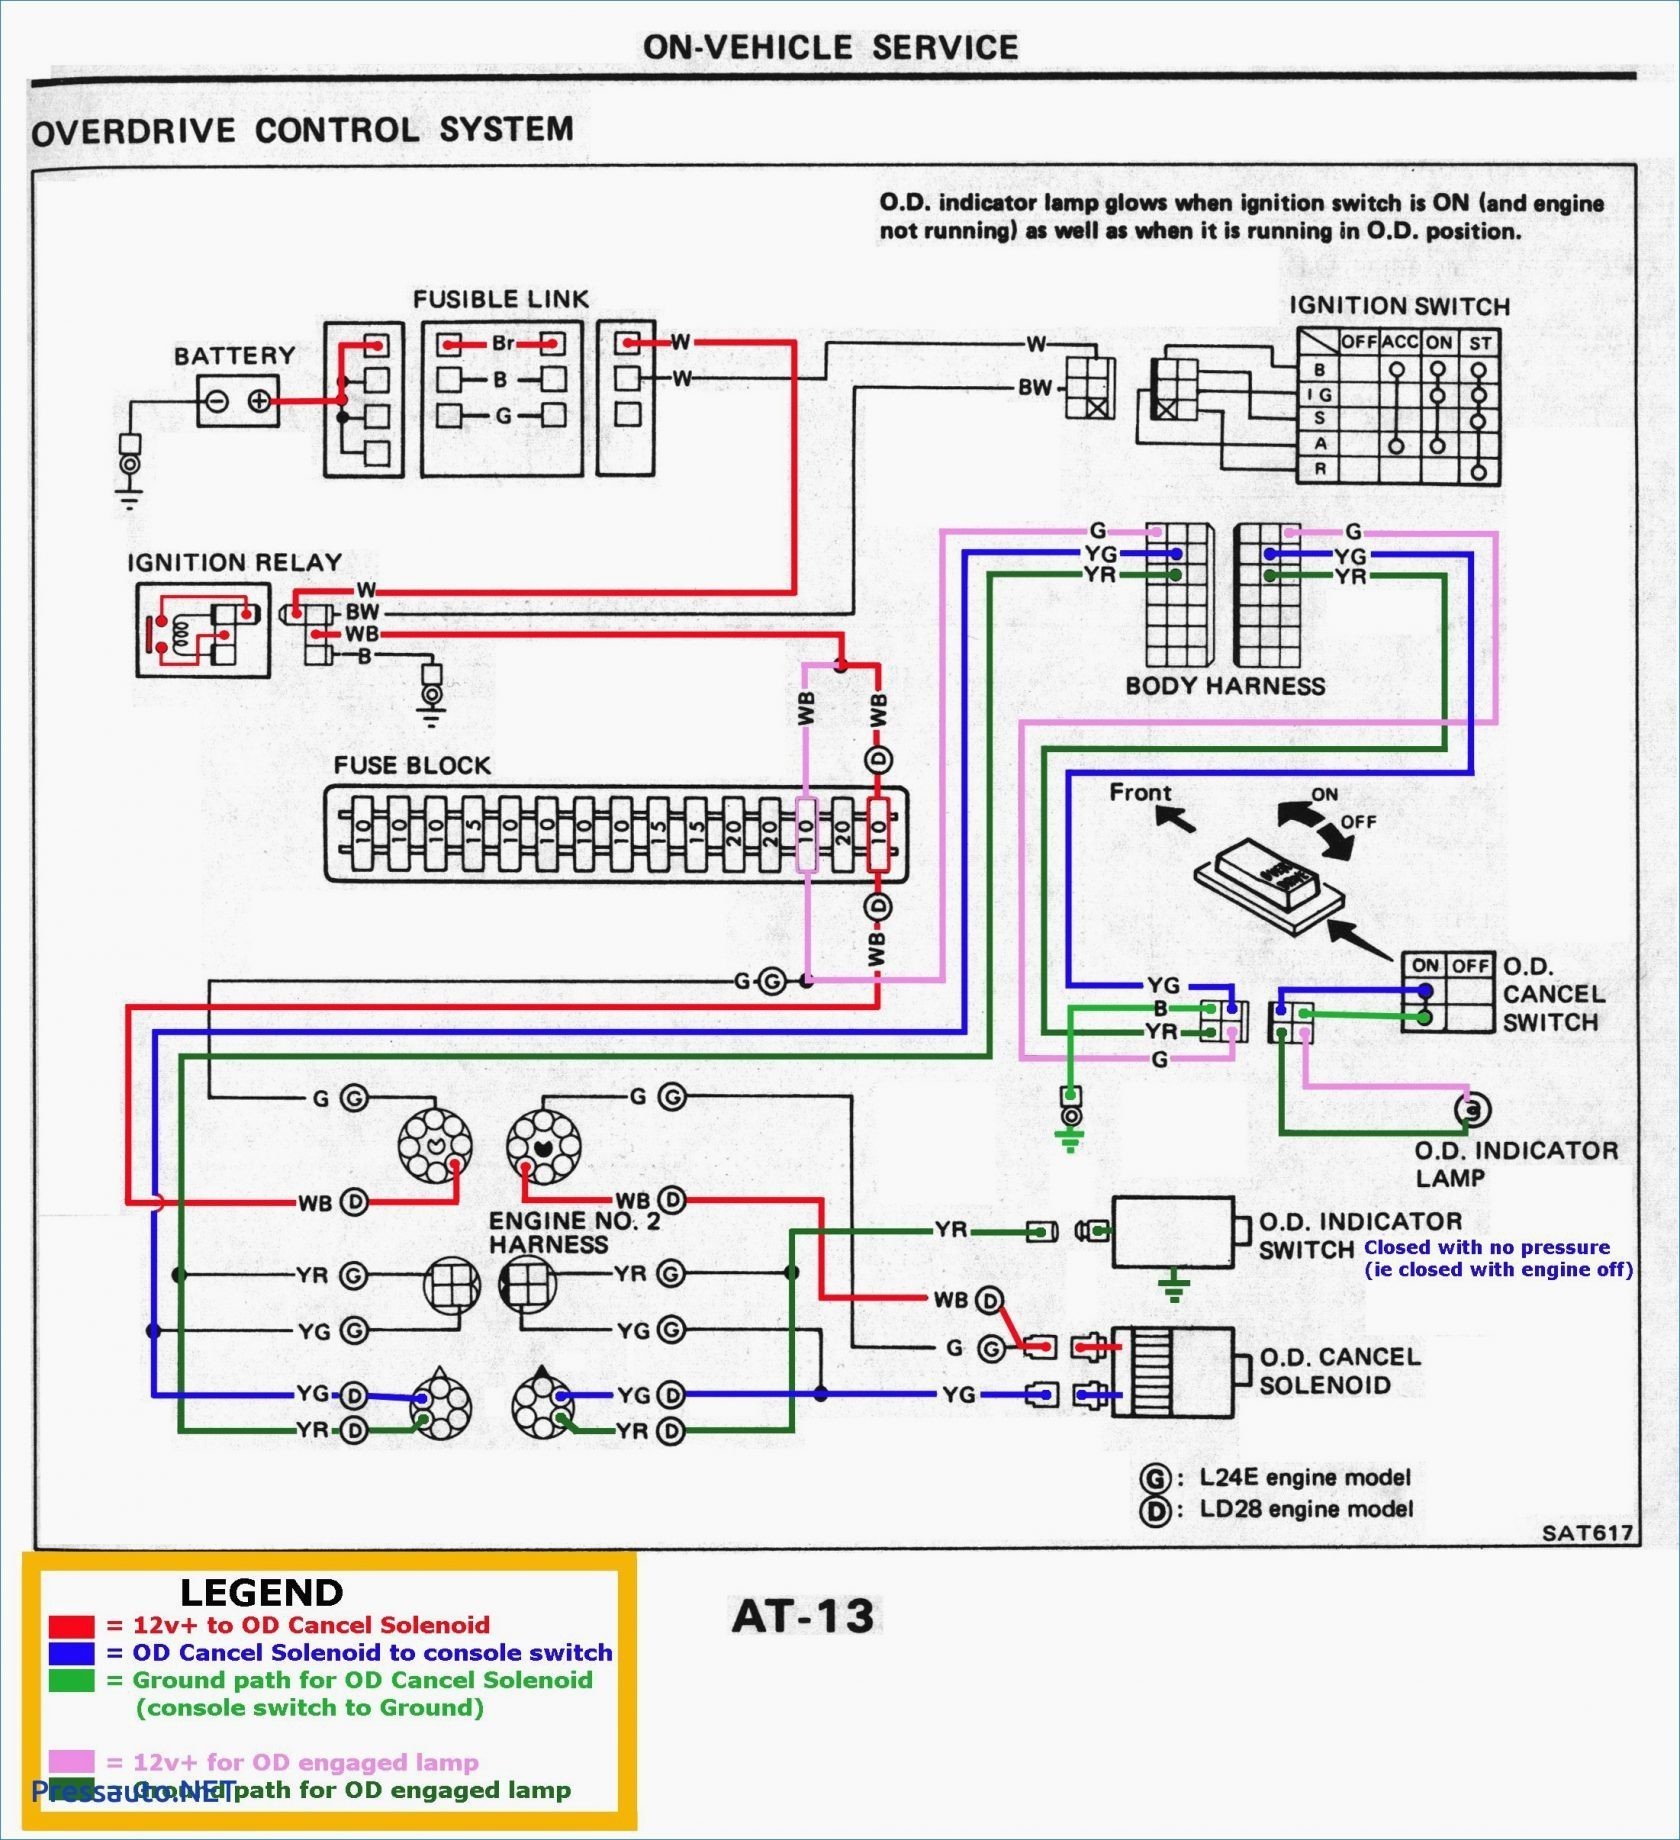 Remote Control Car Circuit Diagram Wiring Diagrams 1998 Auto Car Wiring Diagram toolbox Of Remote Control Car Circuit Diagram